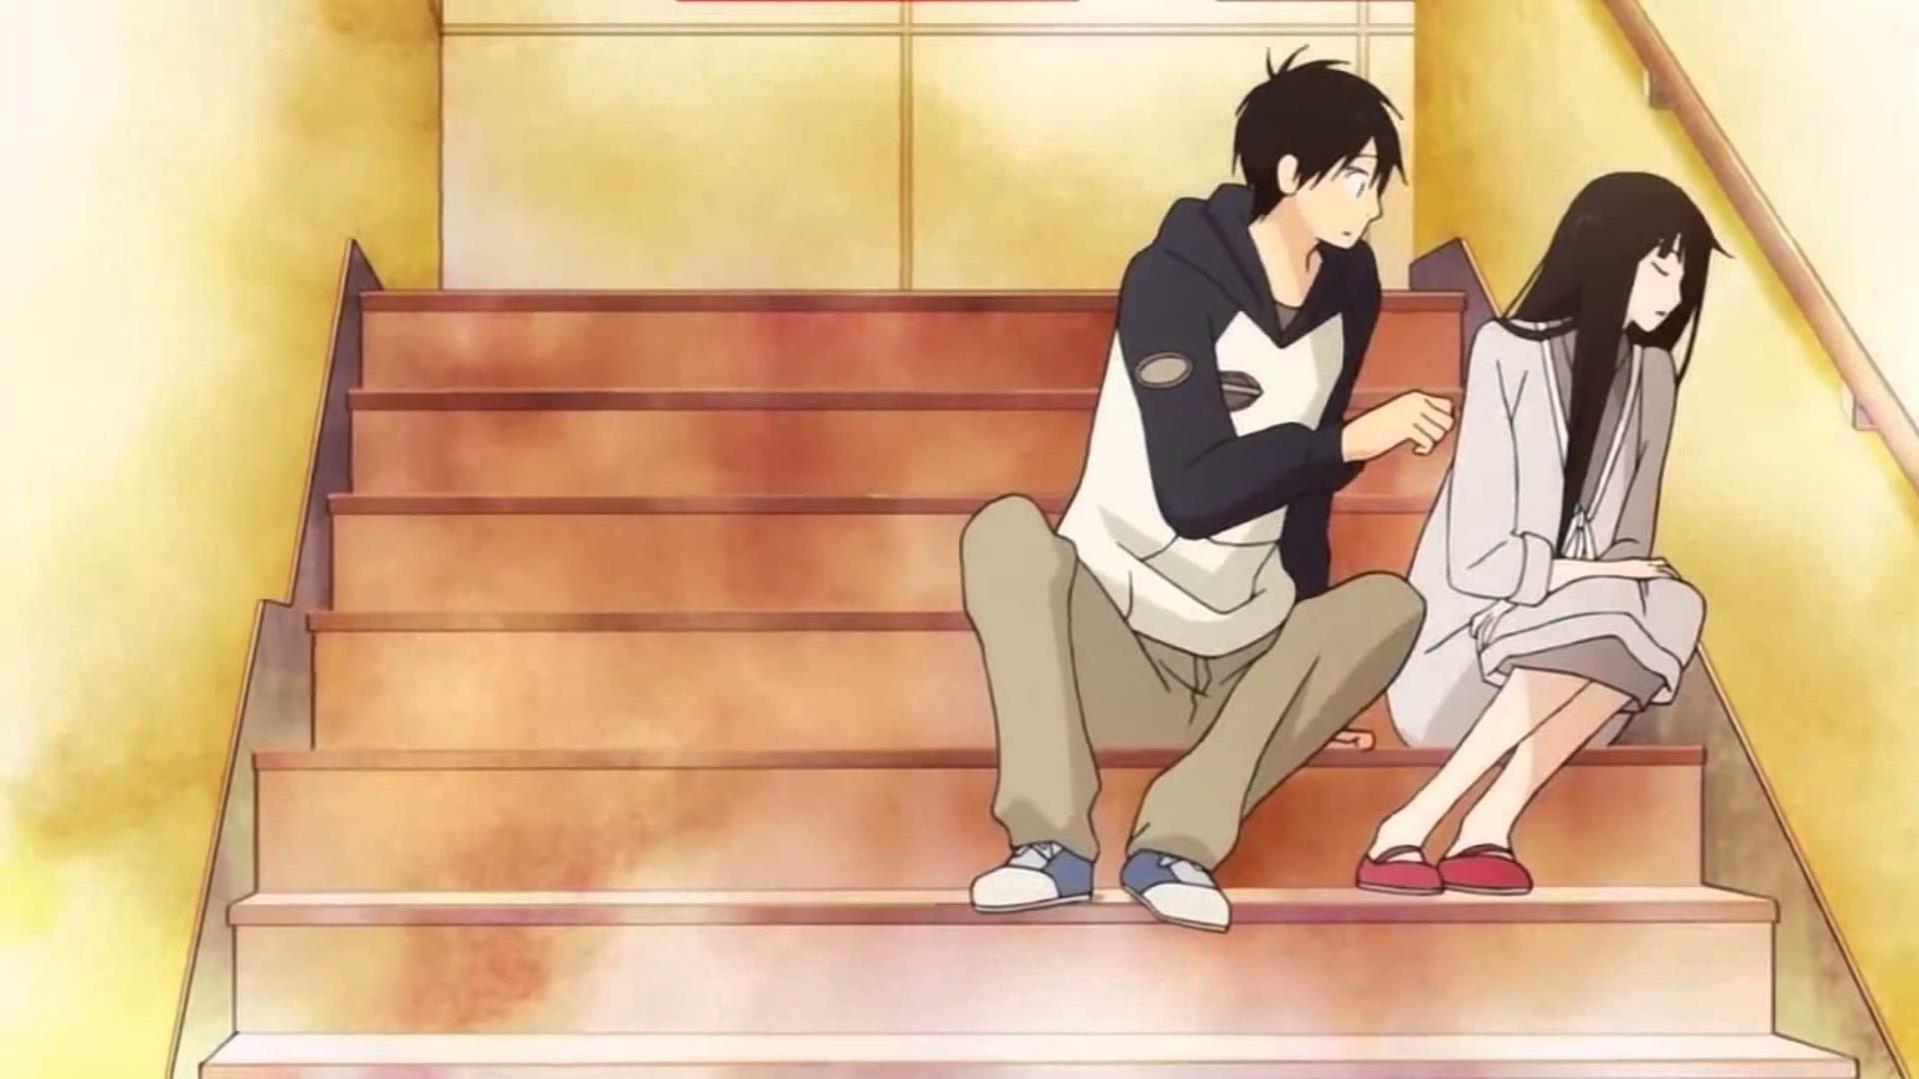 Romance anime series to watch on Valentine's Day | Anime Amino